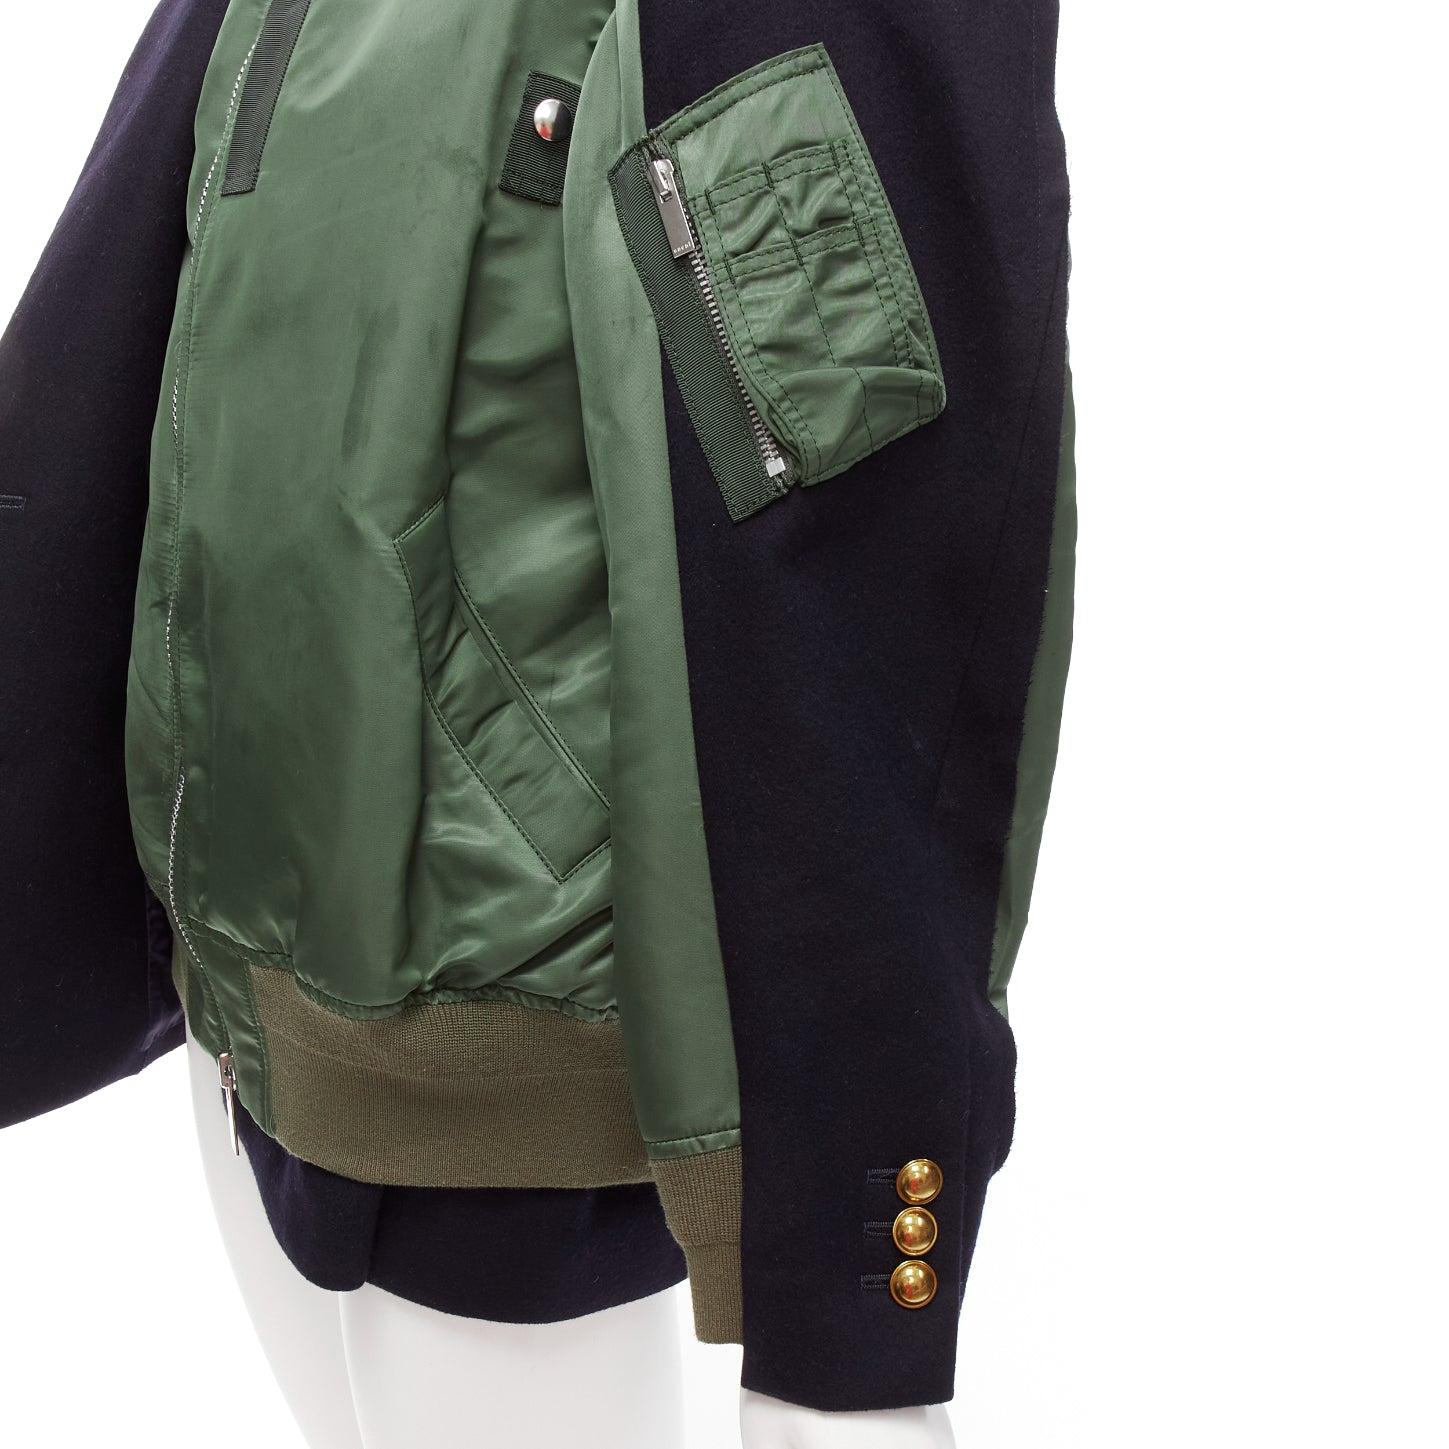 SACAI 2018 black khak hybrid deconstructed half bomber coat jacket JP2 M
Reference: KEDG/A00341
Brand: Sacai
Designer: Chitose Abe
Collection: 2018
Material: Wool, Nylon
Color: Navy, Khaki
Pattern: Solid
Closure: Zip
Lining: Orange Fabric
Made in: